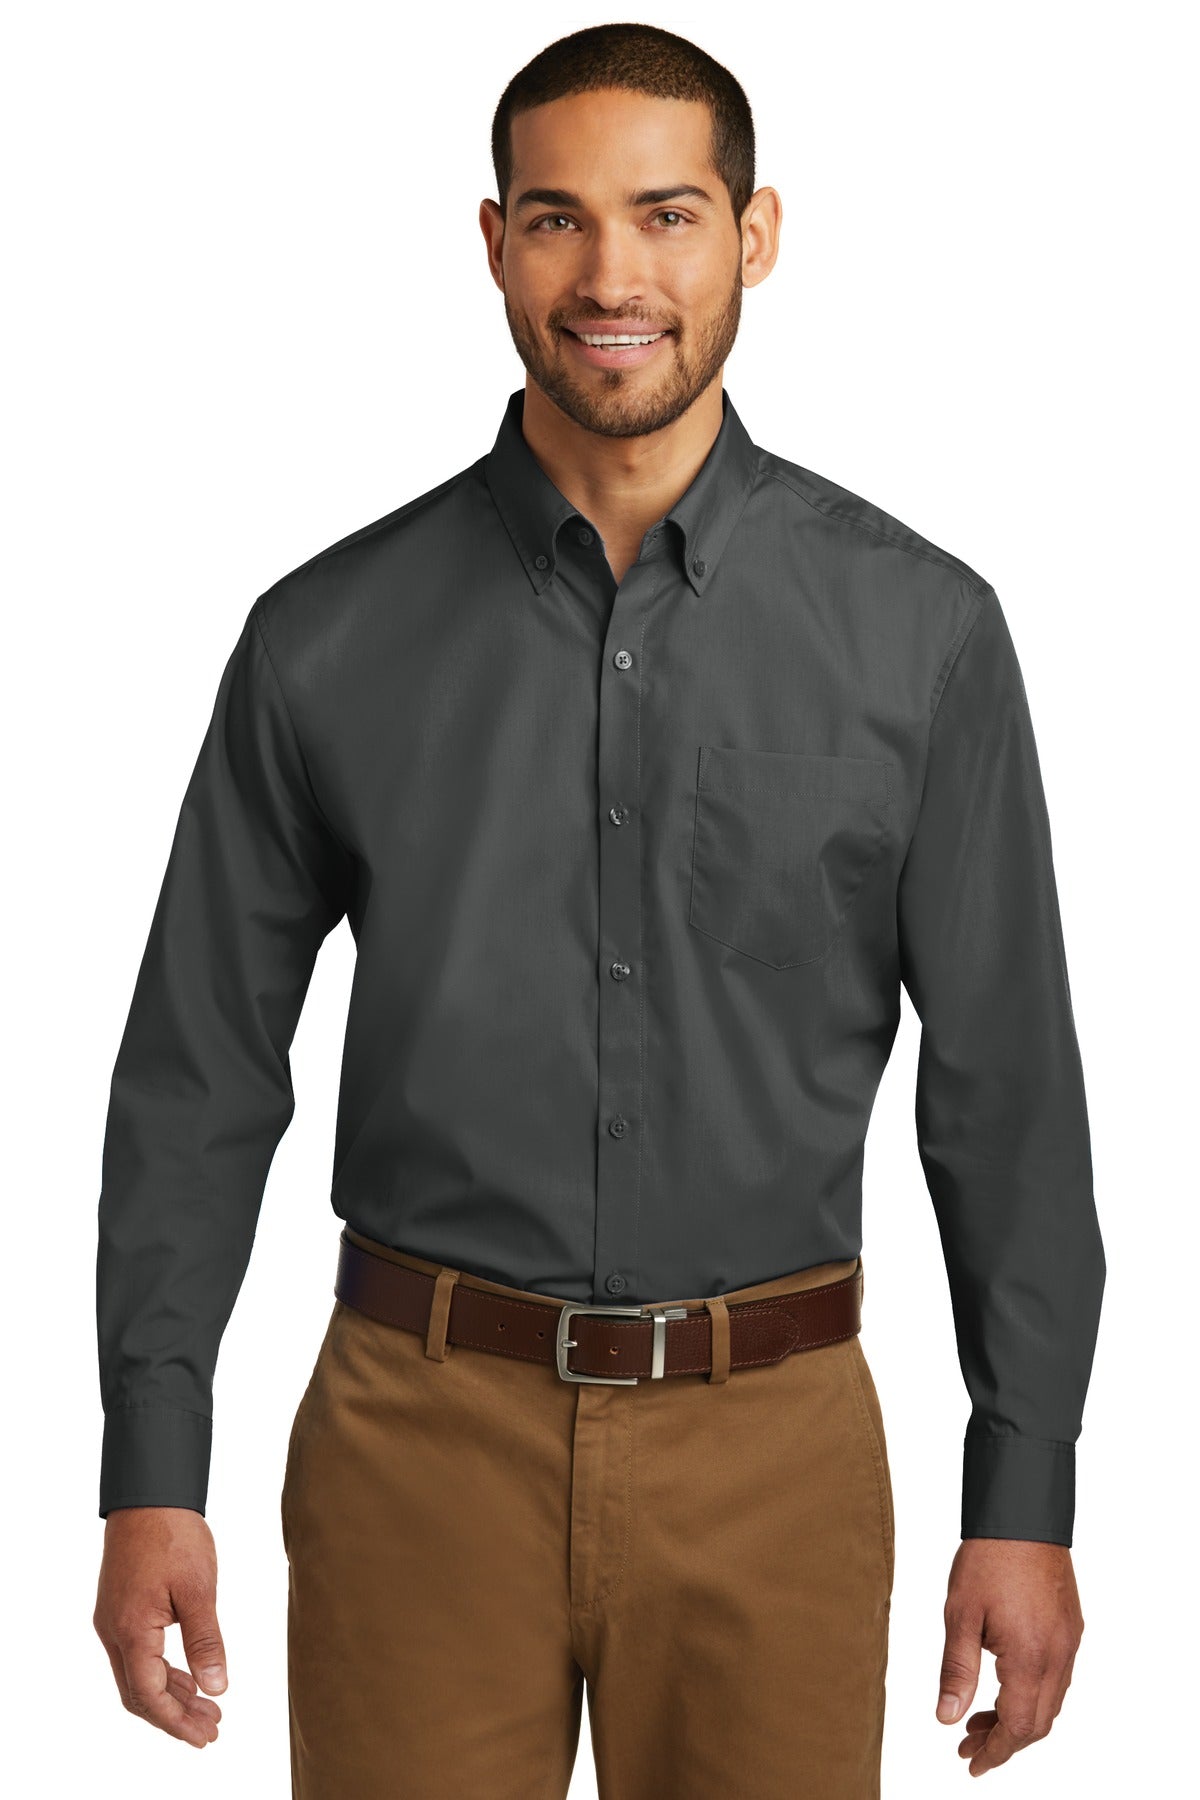 Port Authority® Long Sleeve Carefree Poplin Shirt. W100 [Graphite] - DFW Impression